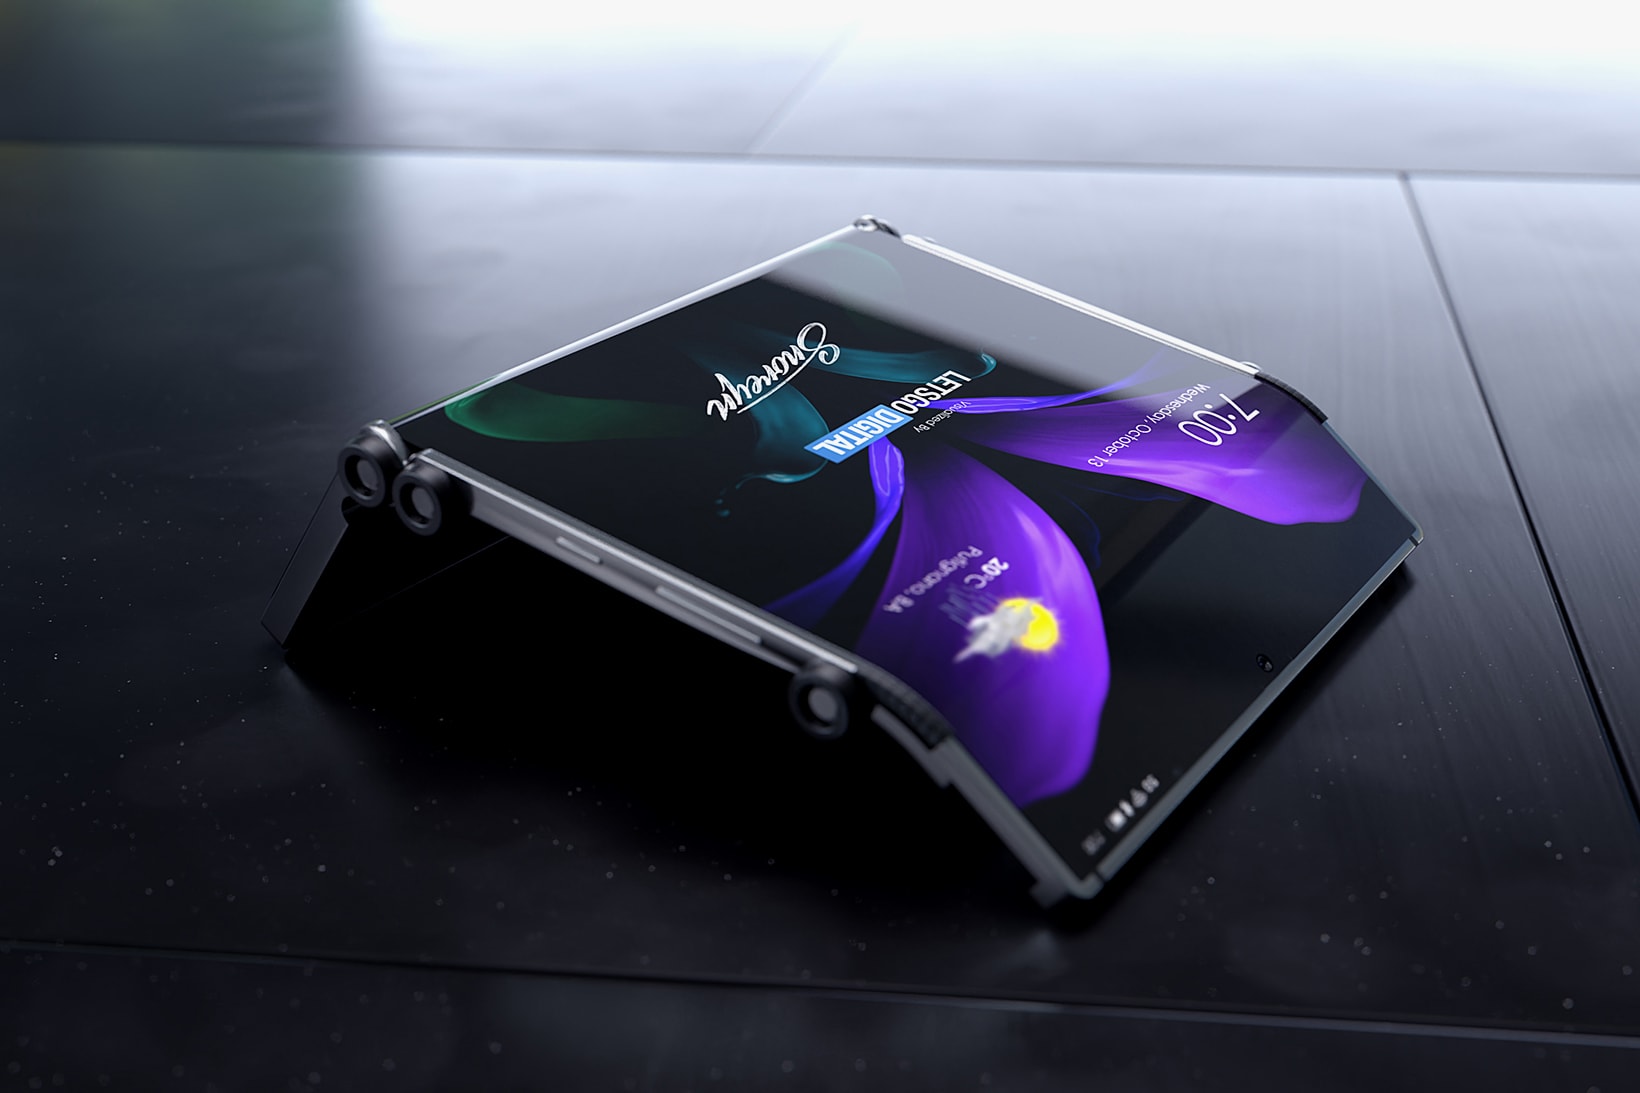 samsung galaxy z dual fold 5g tablet smartphone phone foldable screen tech